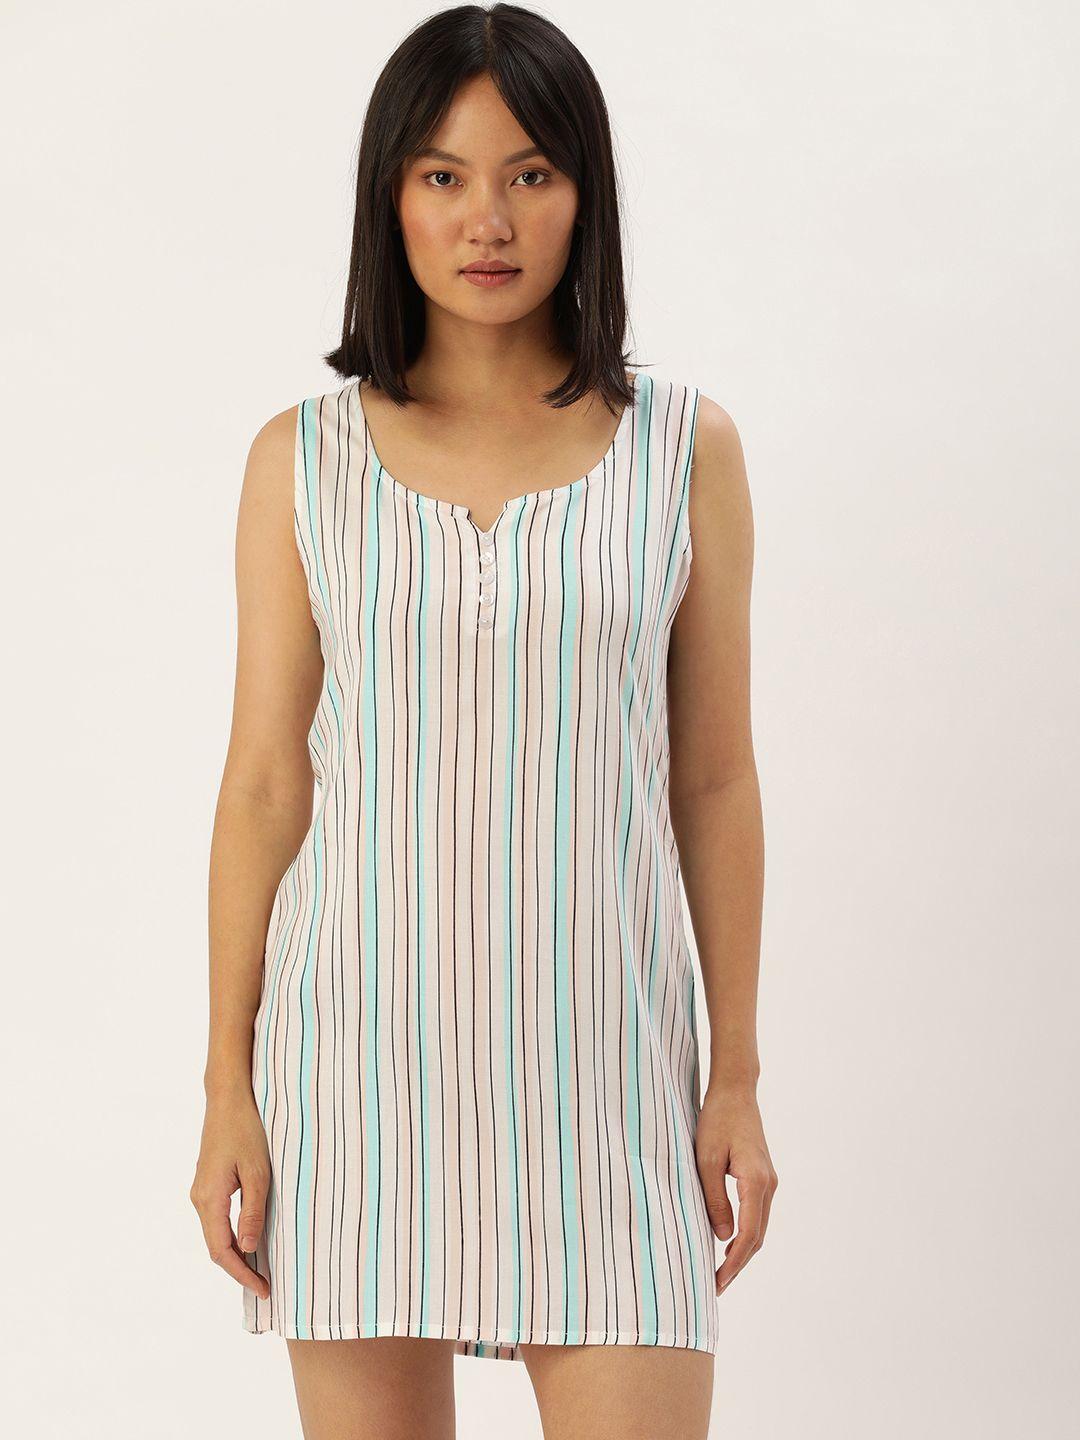 etc-white-&-blue-striped-t-shirt-nightdress